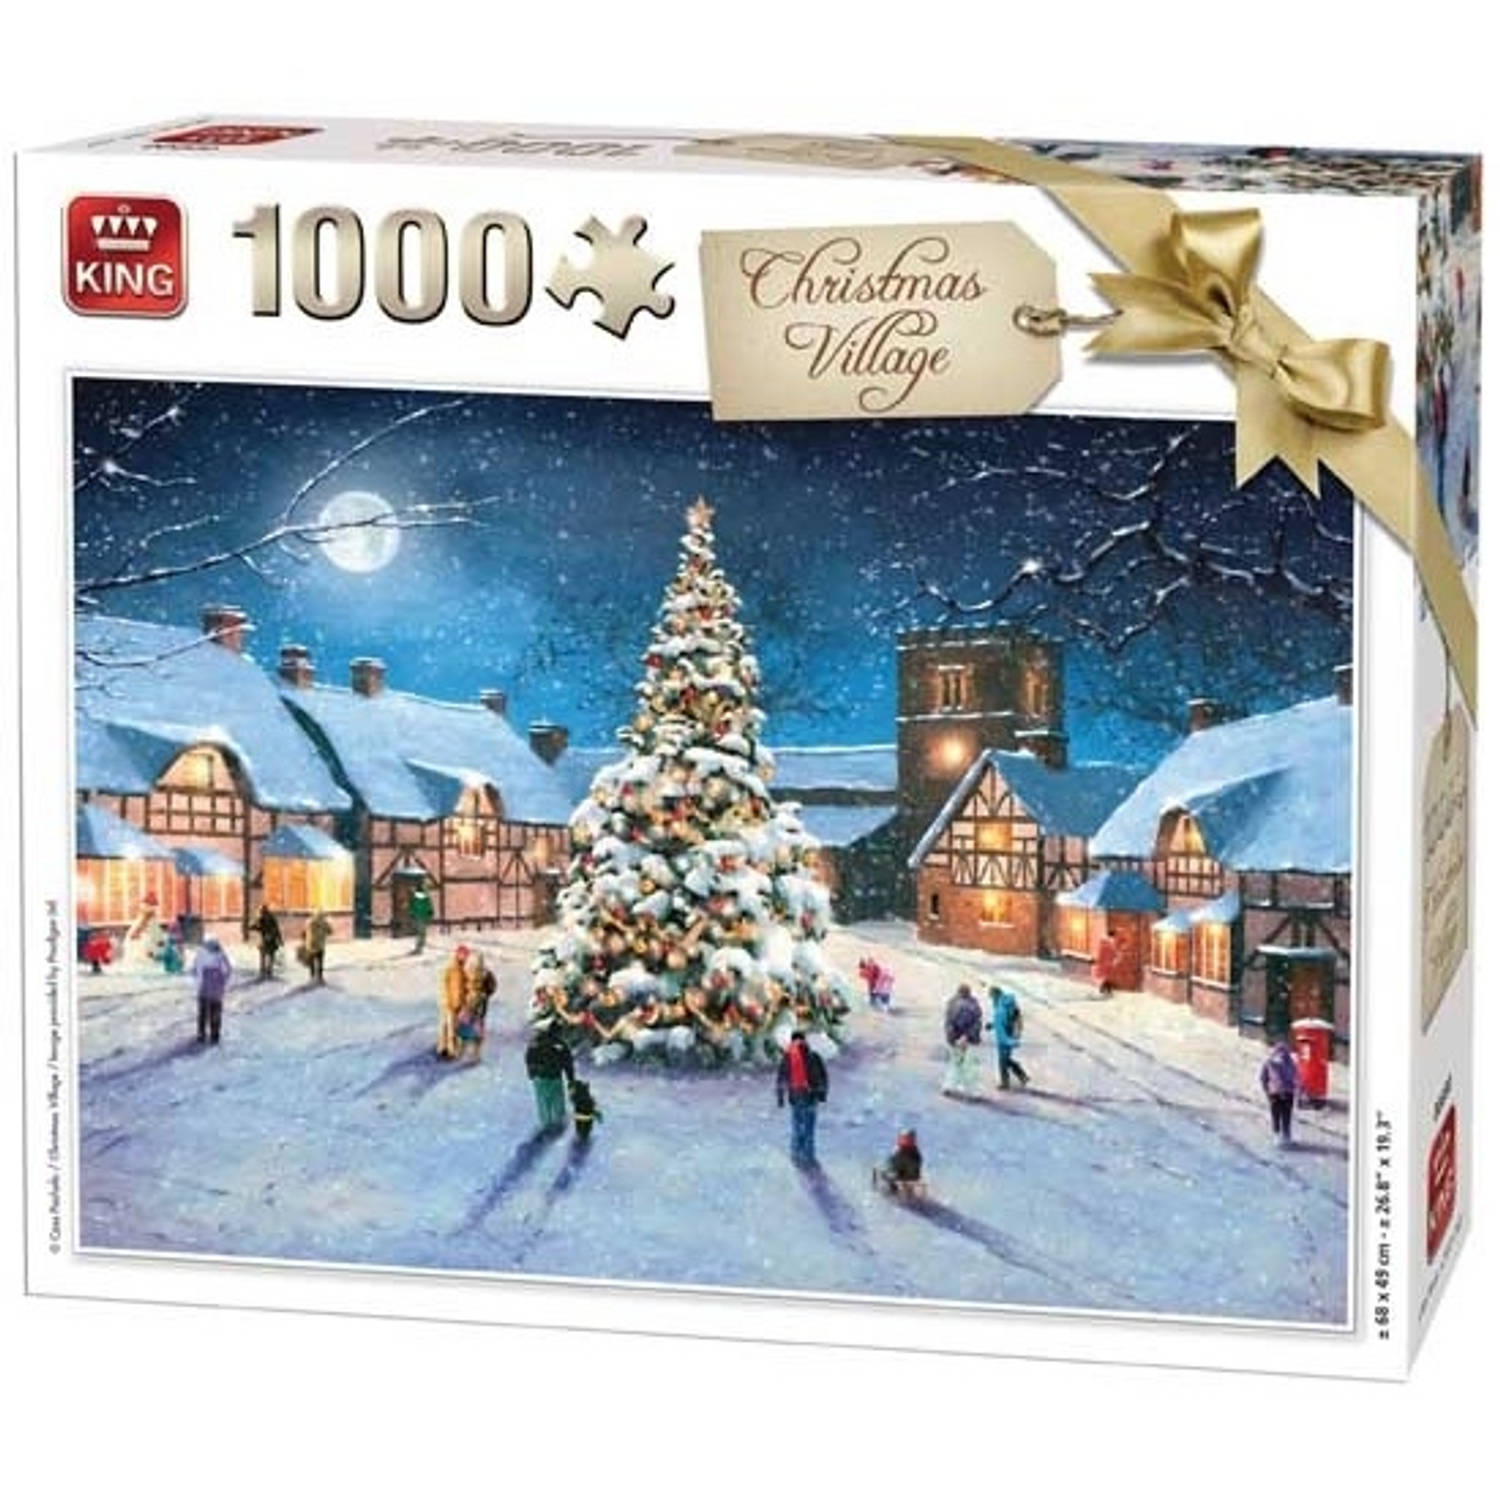 King Puzzel 1000 Stukjes (68 x 49 cm) - Christmas Village - Legpuzzel Kerst / Winter